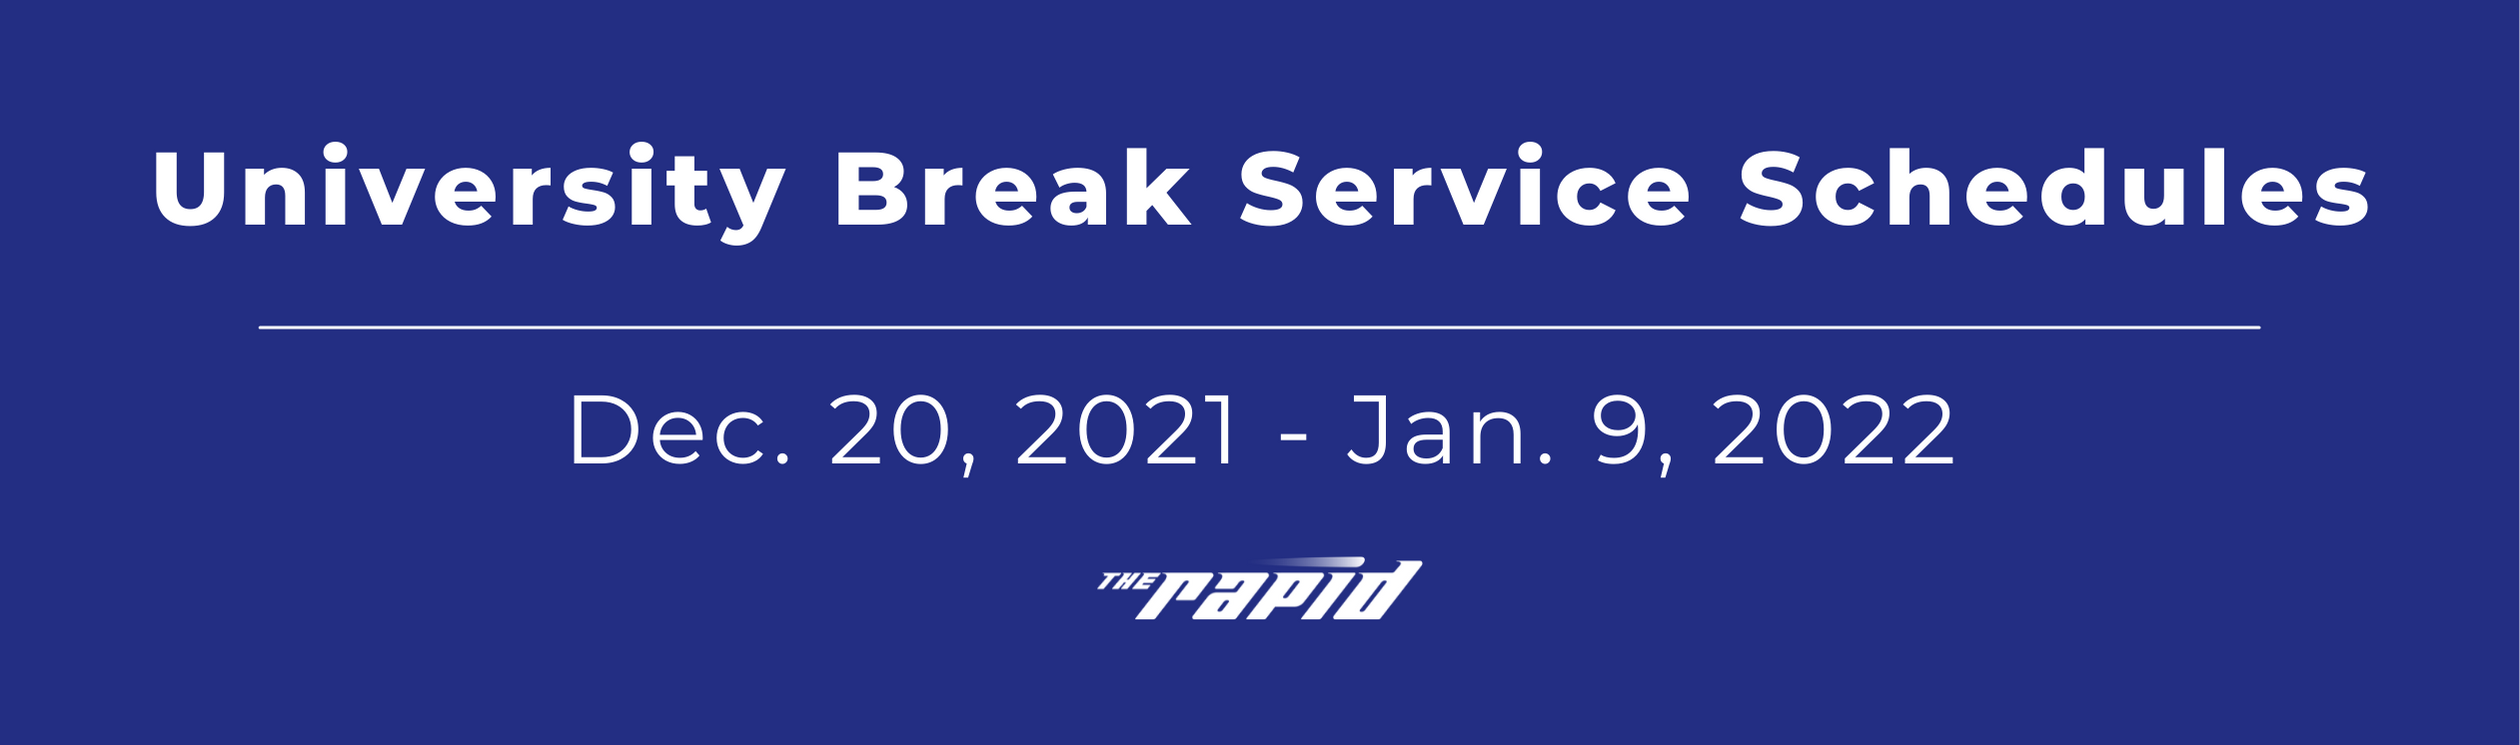 2021 Winter University Break Service - Hero